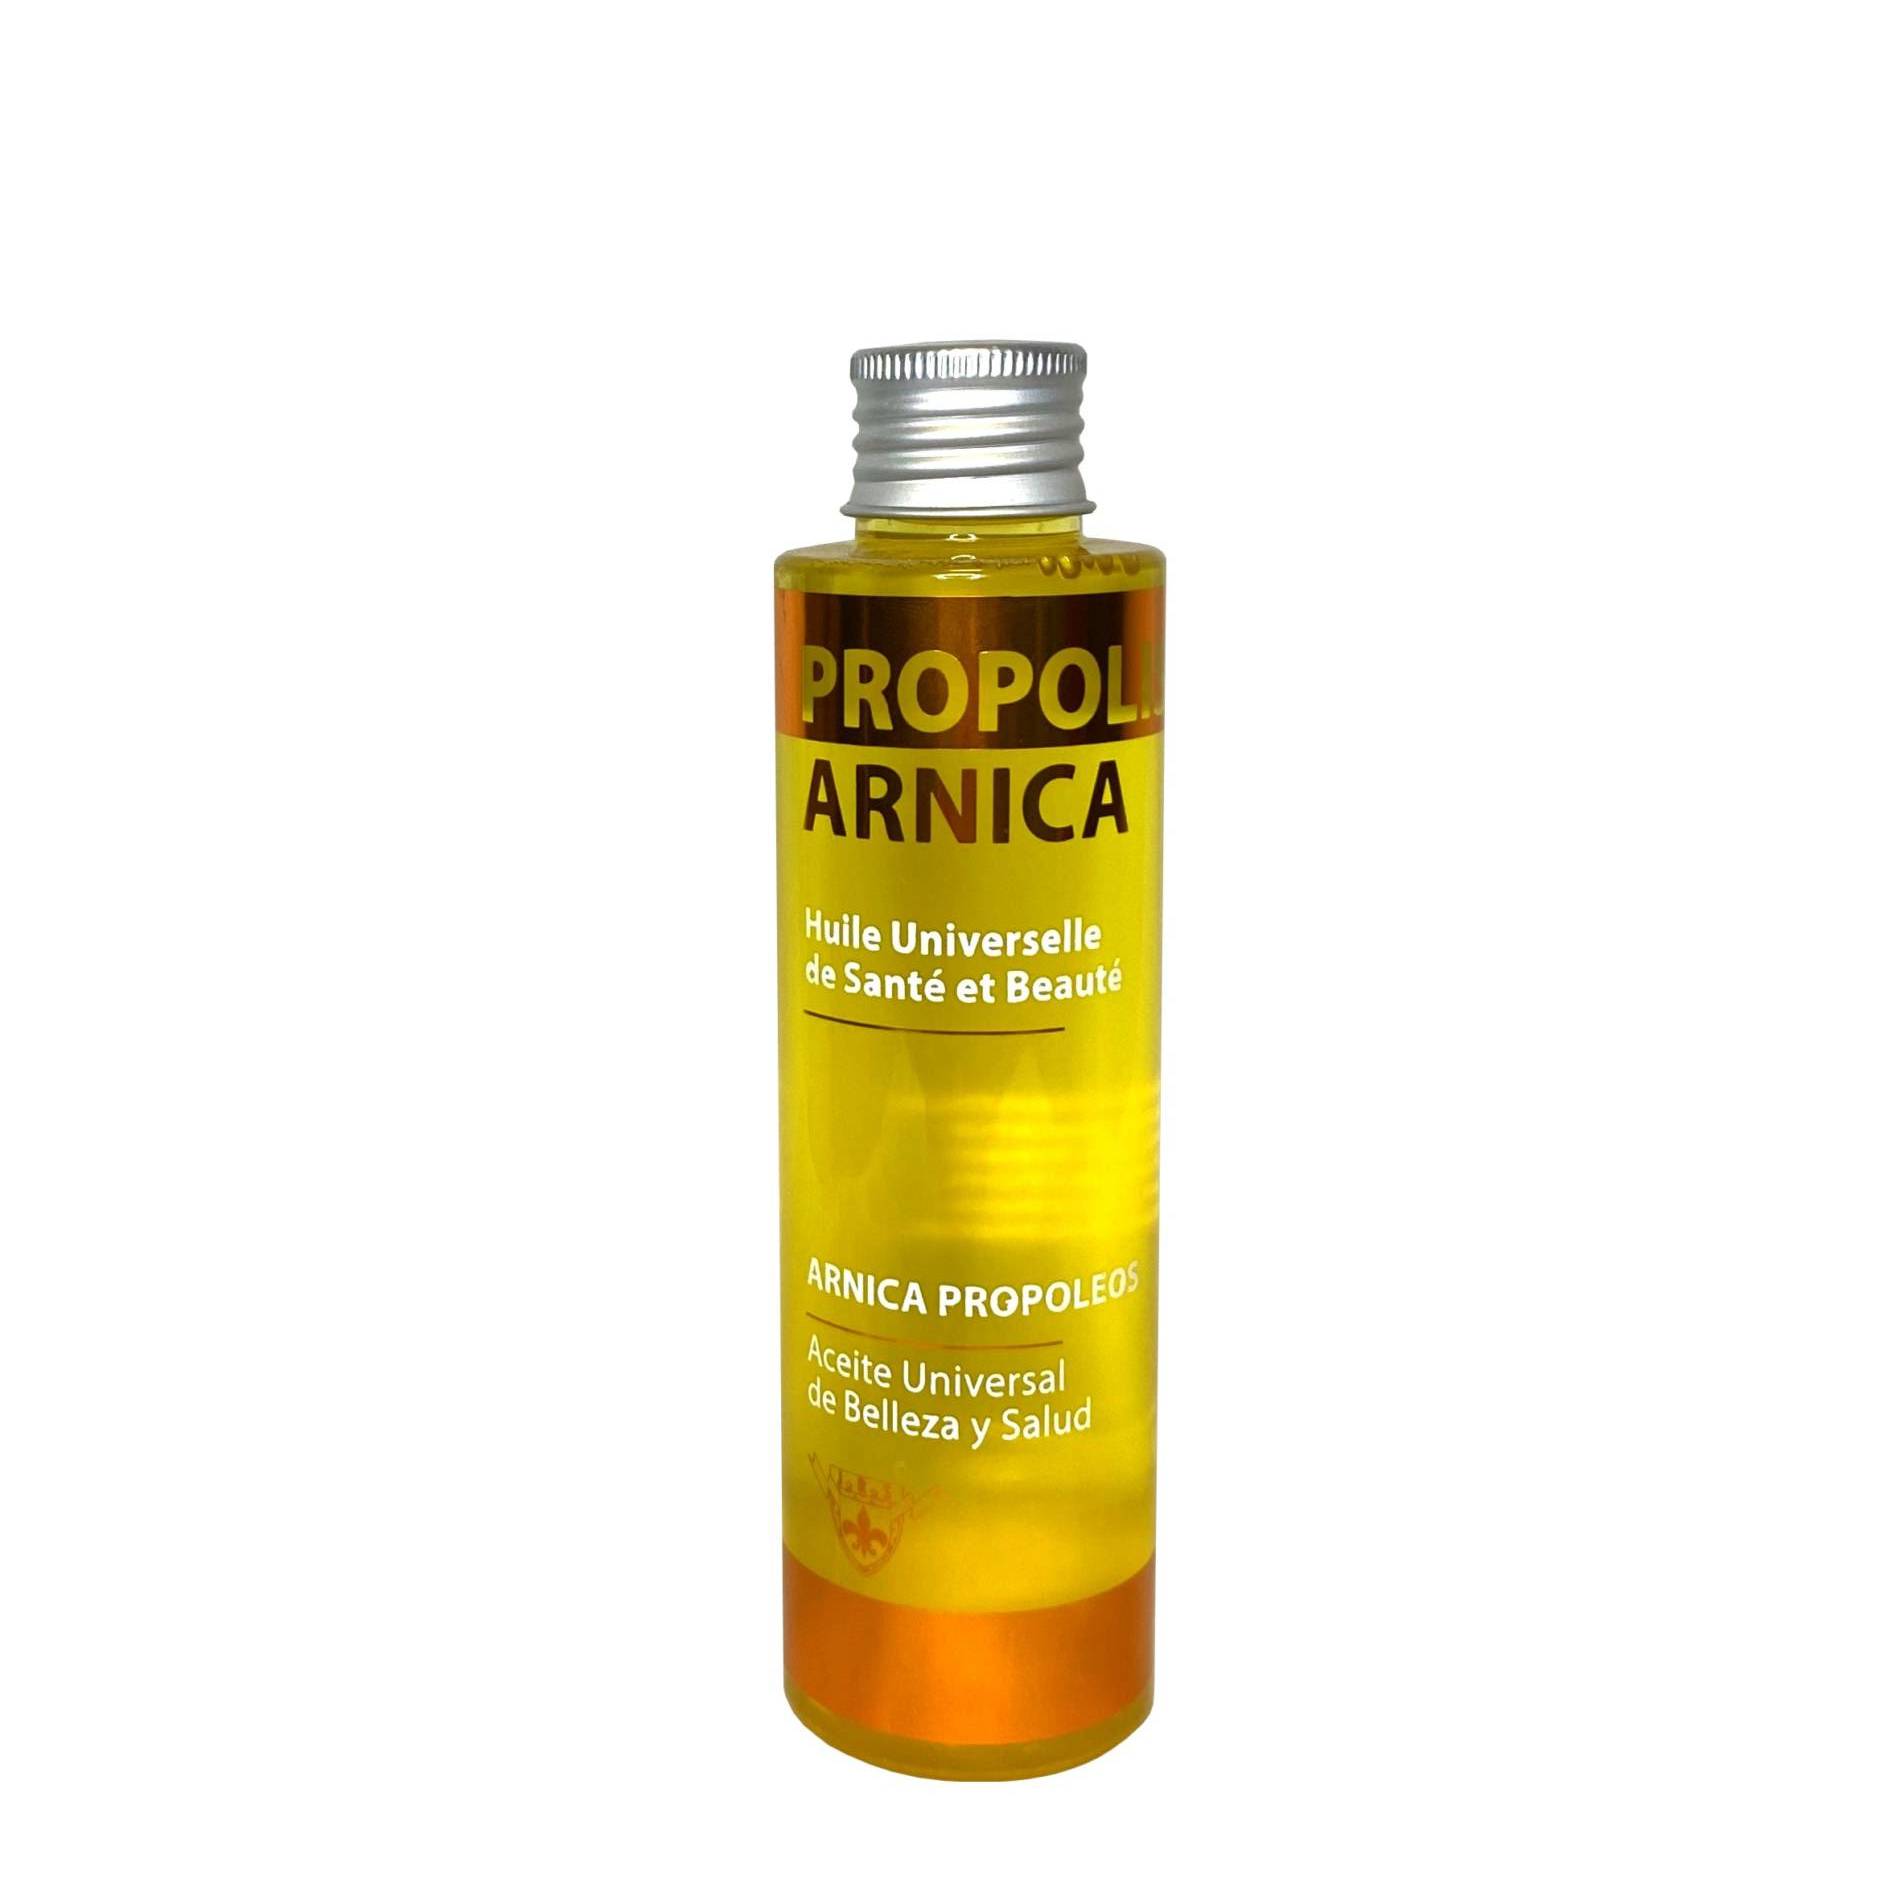 Propolis Arnica propolis arnica huile laboratoire jrs scaled e1640963694203